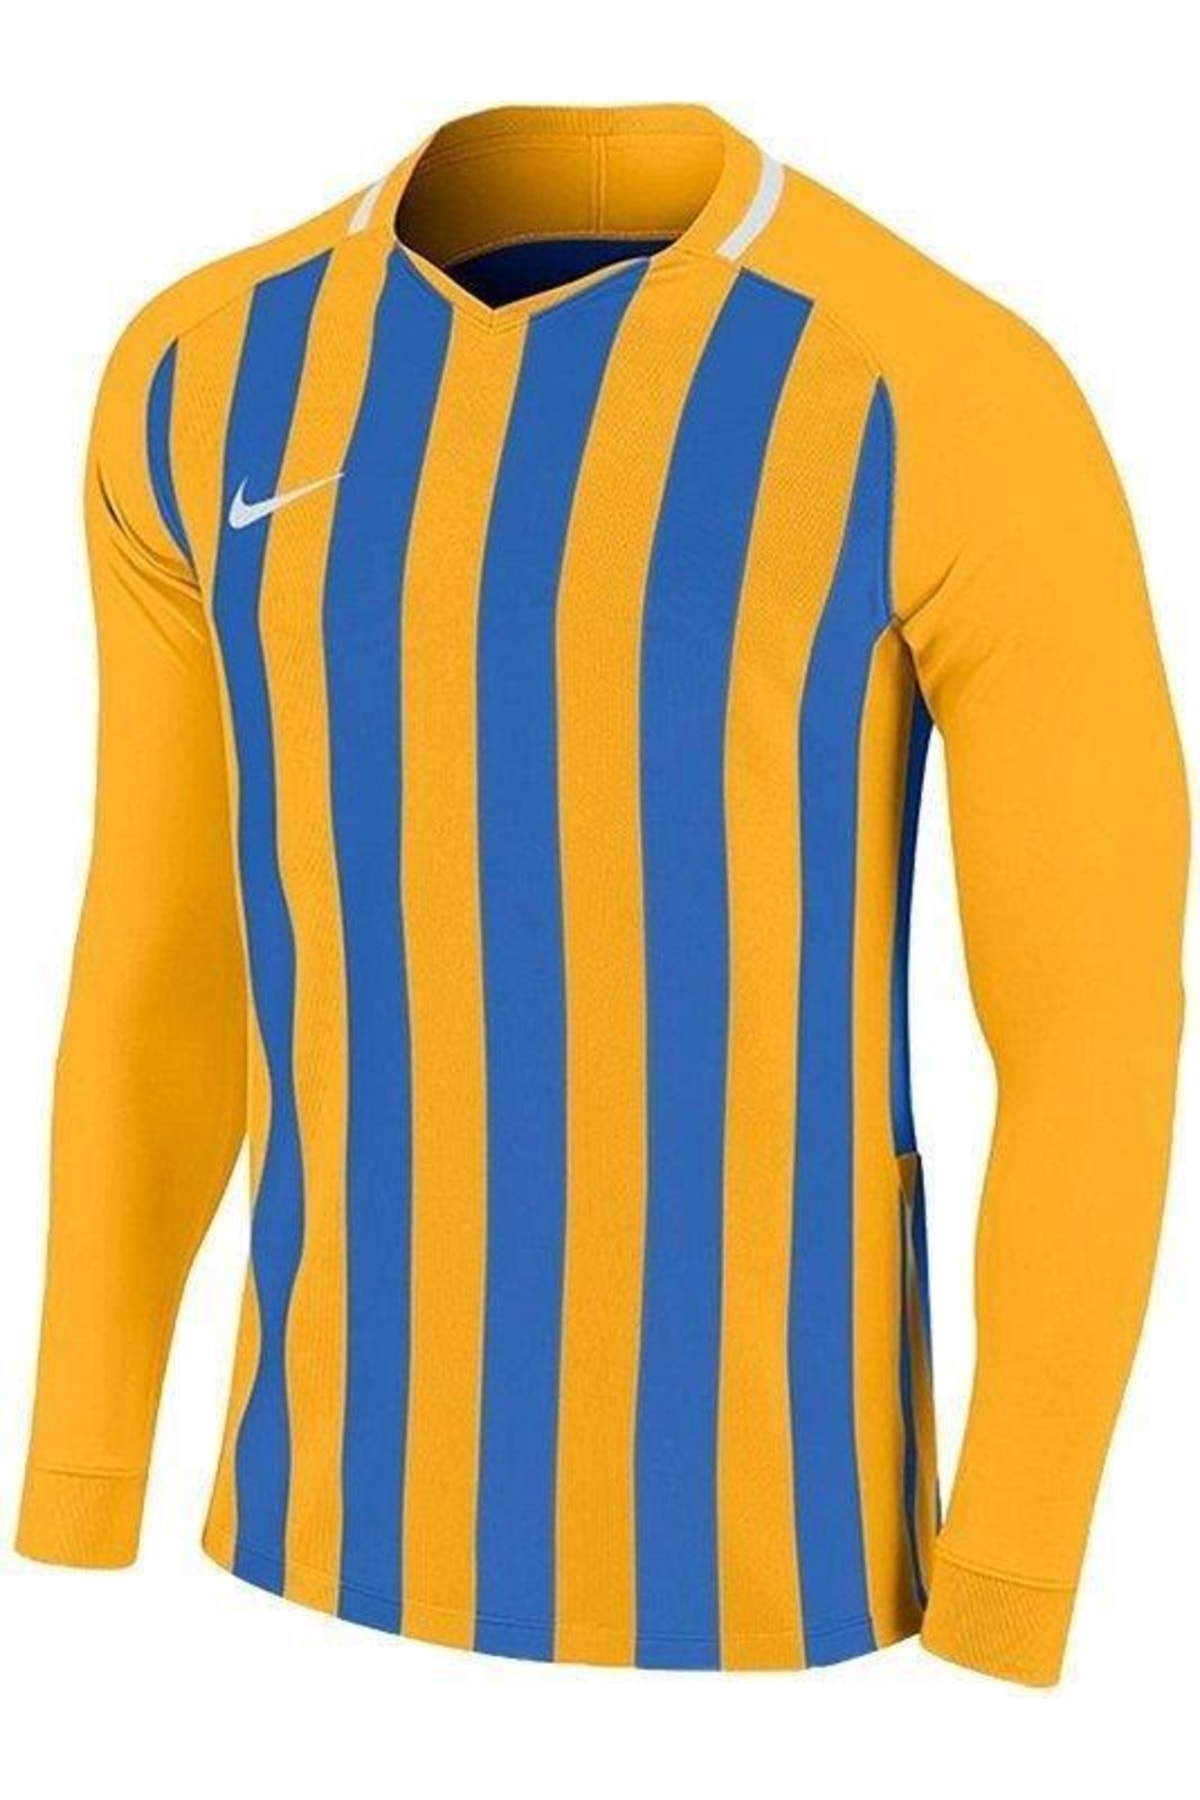 Nike Striped Division Erkek Futbol Forma Sarı 894087-740